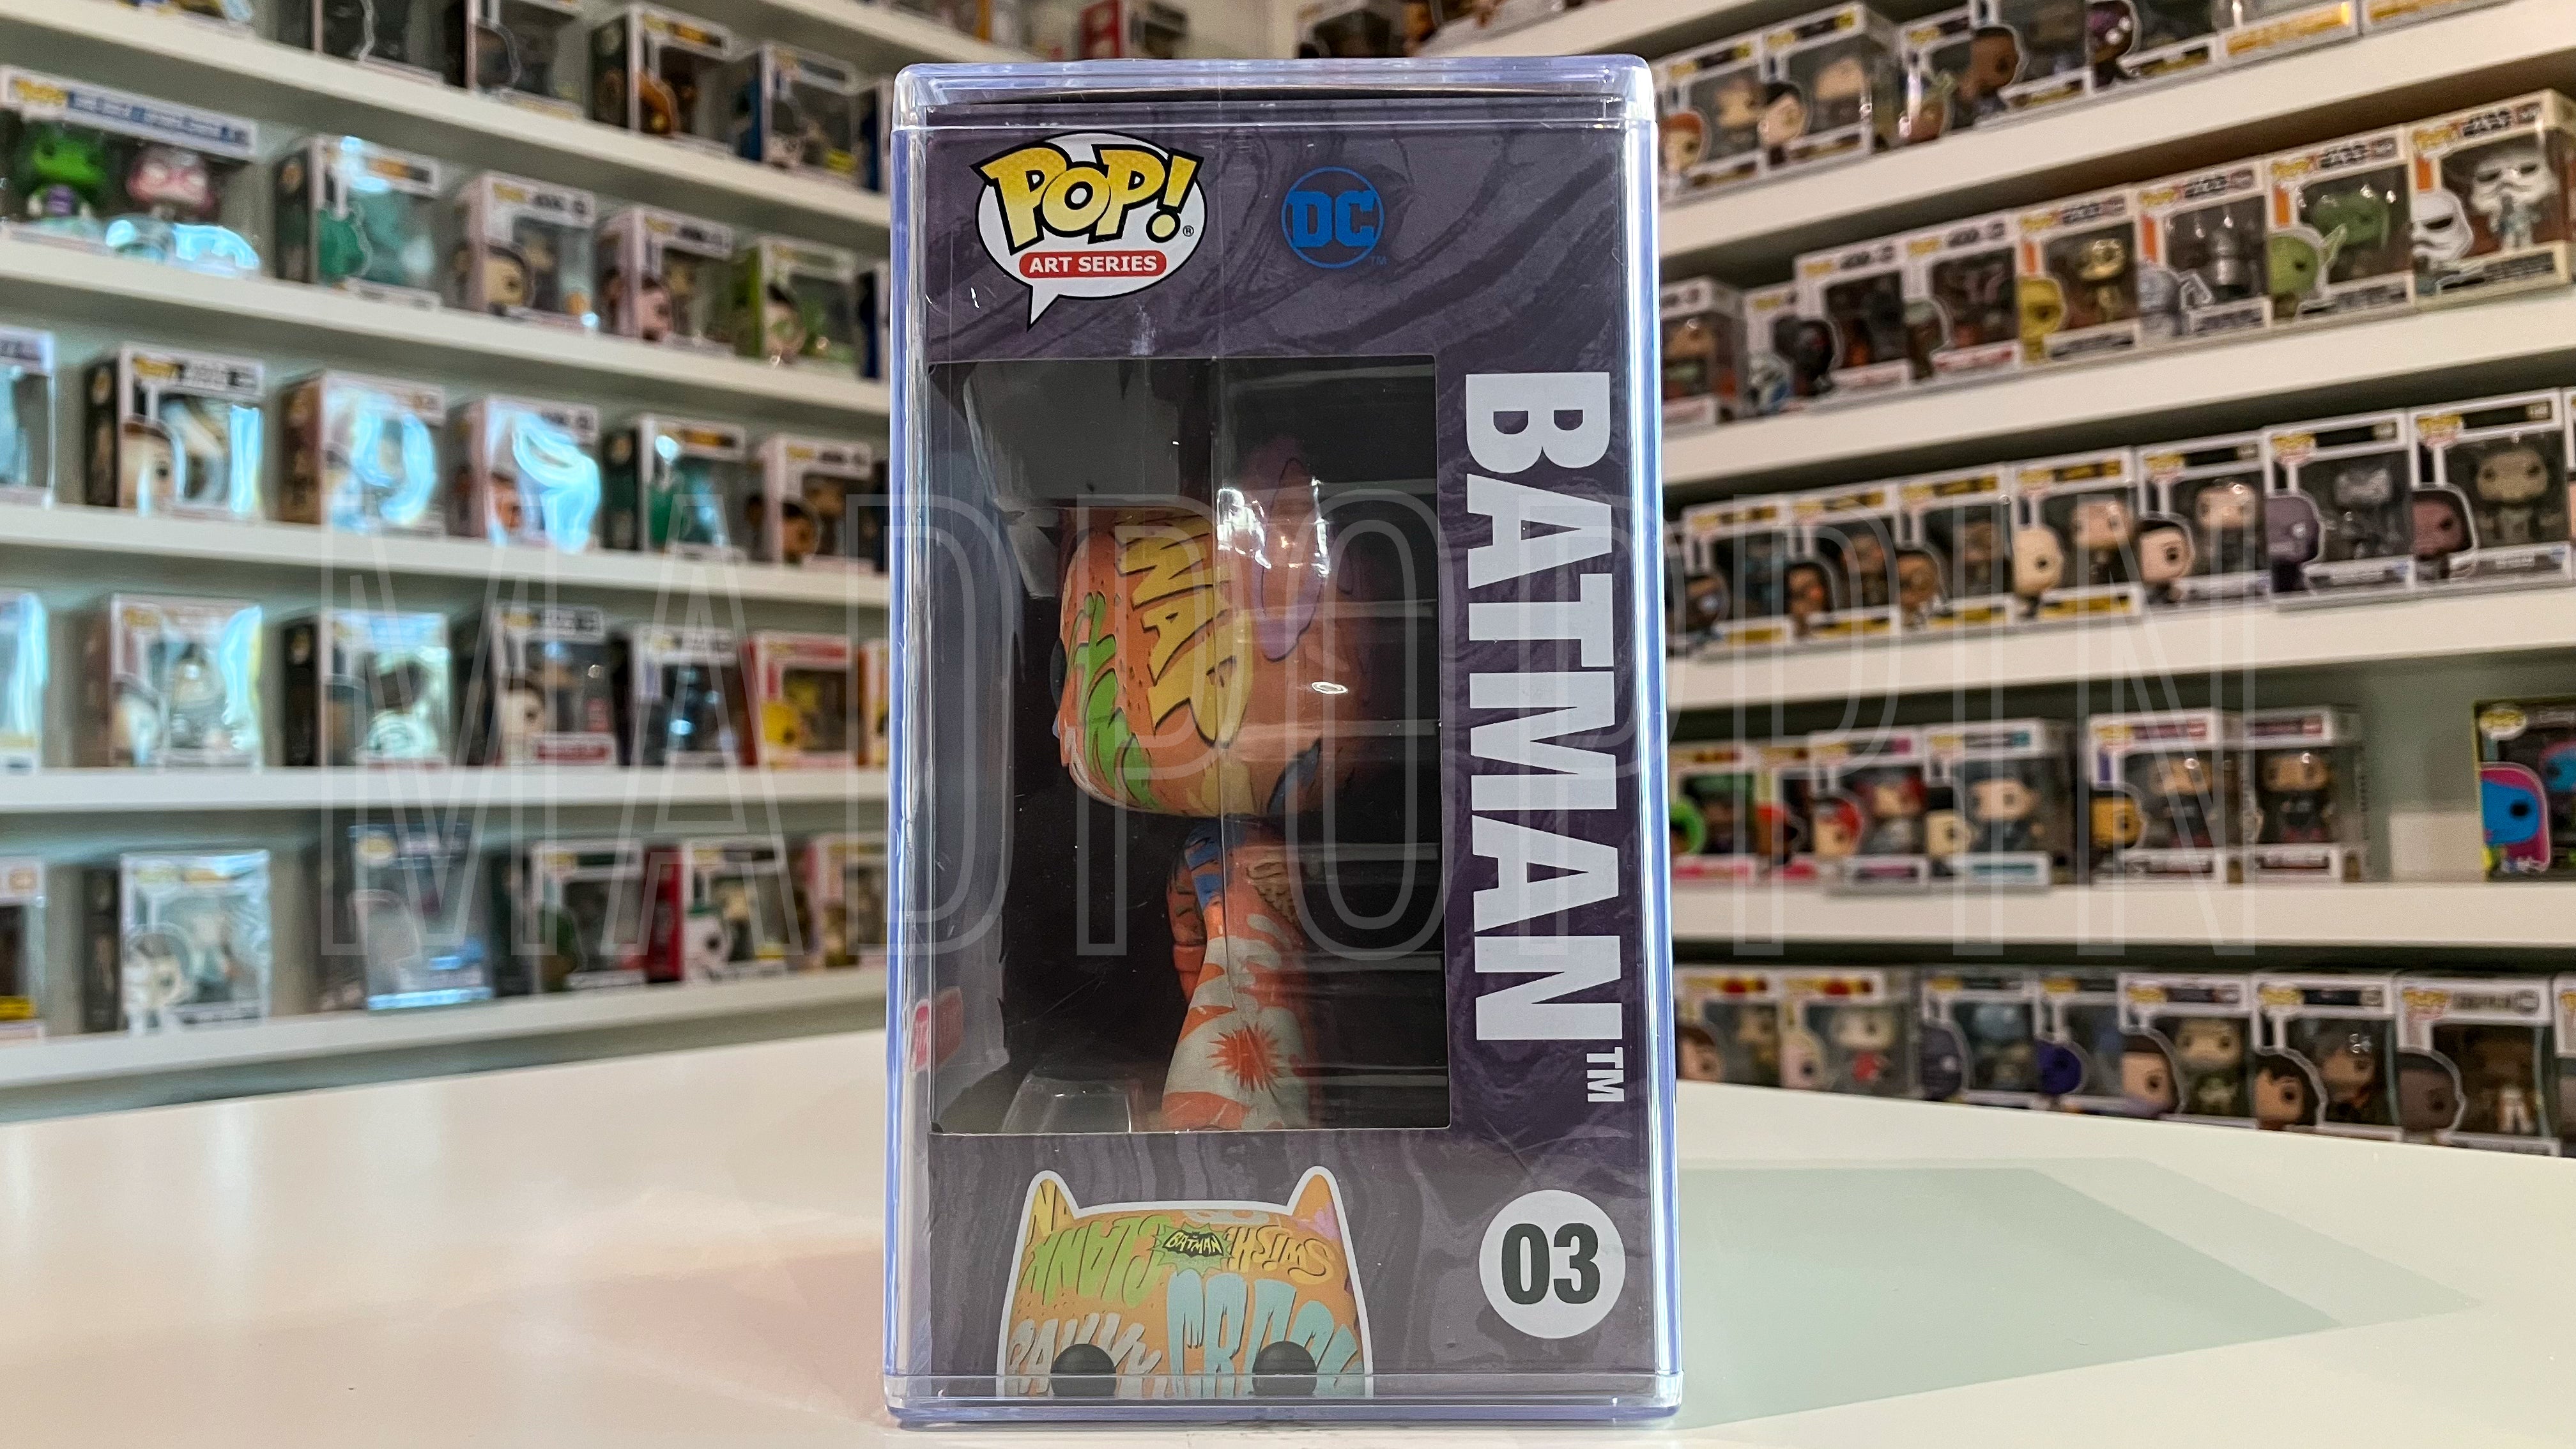 POP! Art Series: DC - Batman (Orange & Yellow)